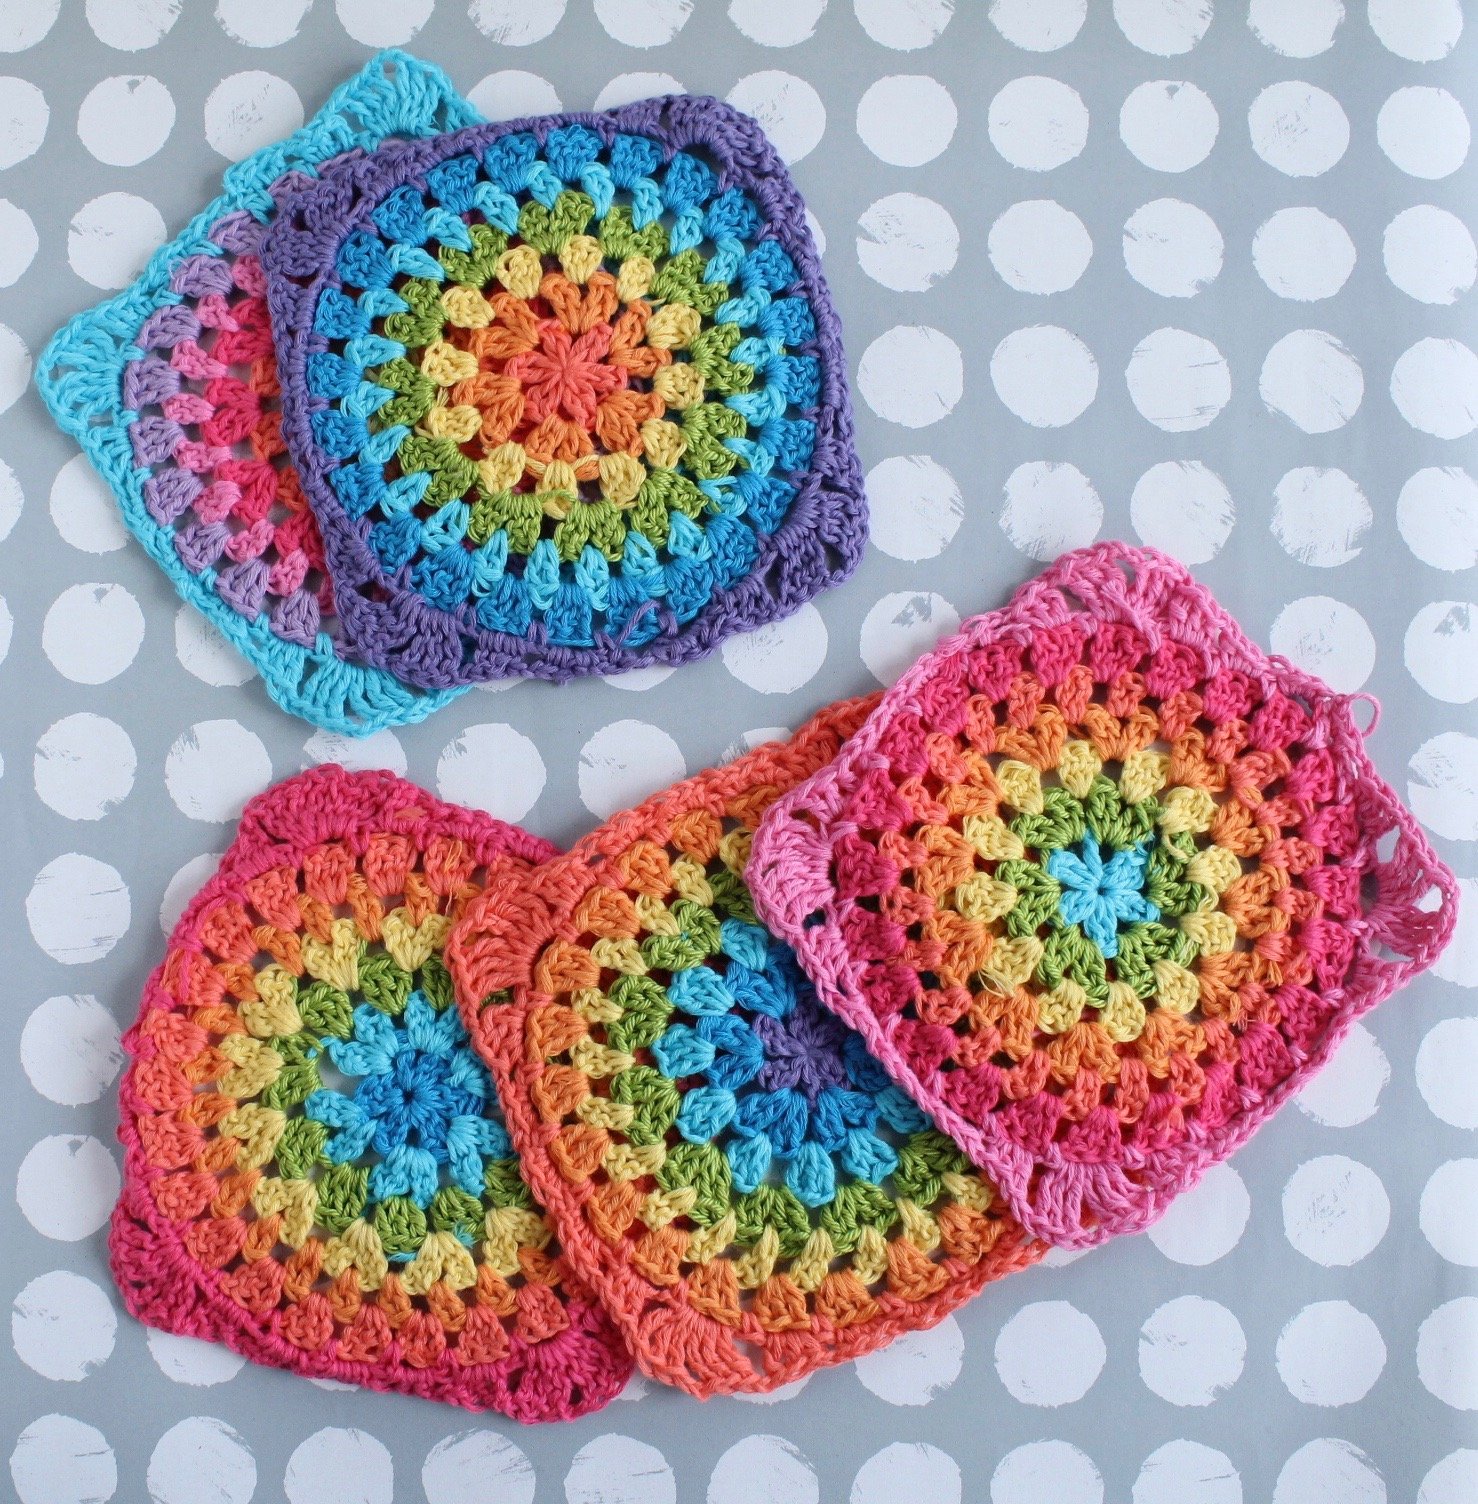 Crochet Granny Square Pattern Rainbow Granny Square Tutorial For Beginners And Intermediate